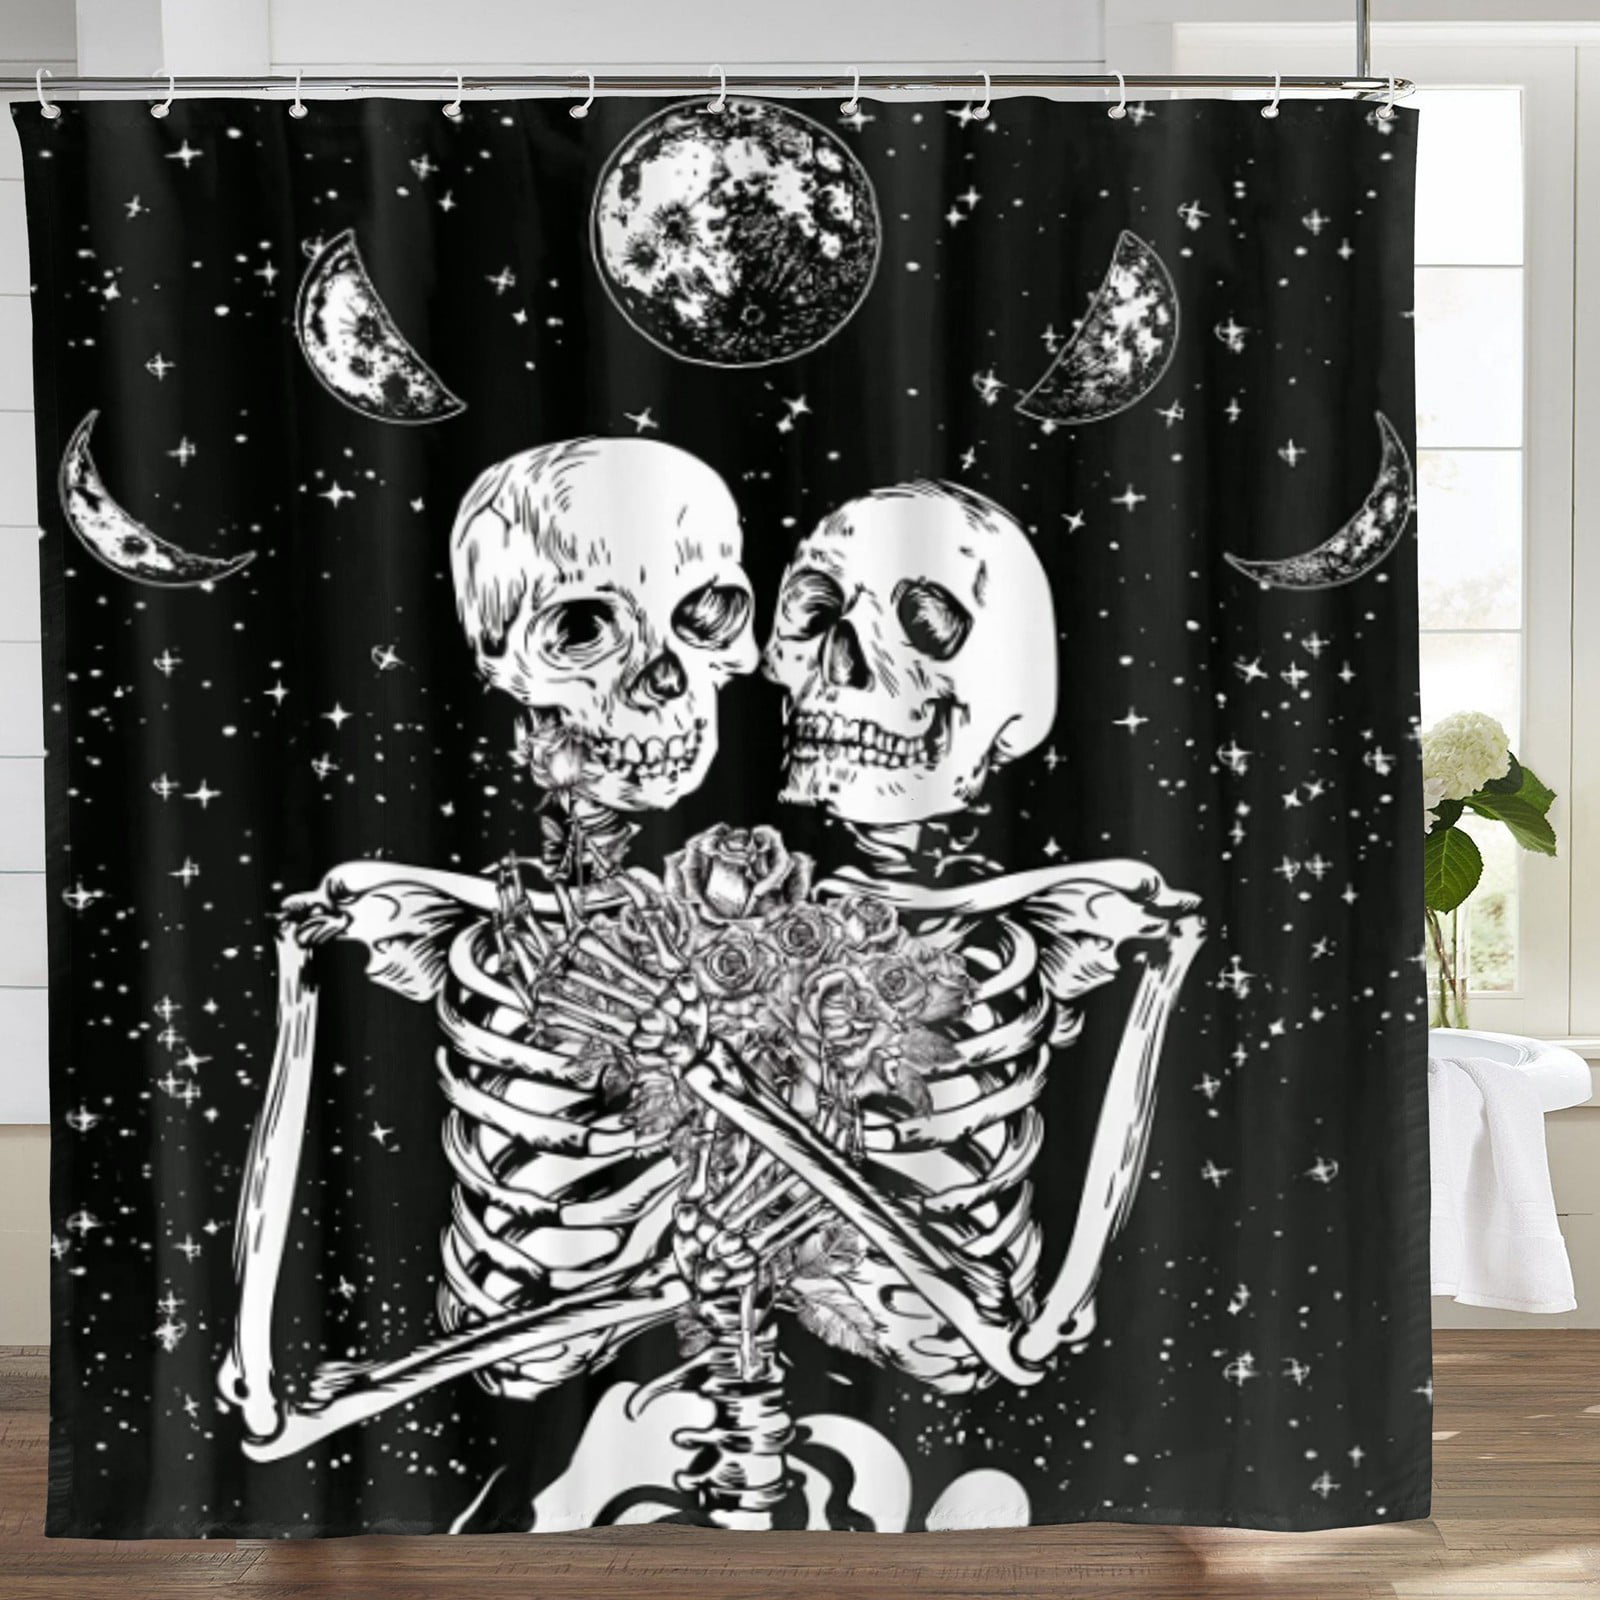 Funny Skull Shower Curtain Happy Halloween Skulls Skeleton Shower